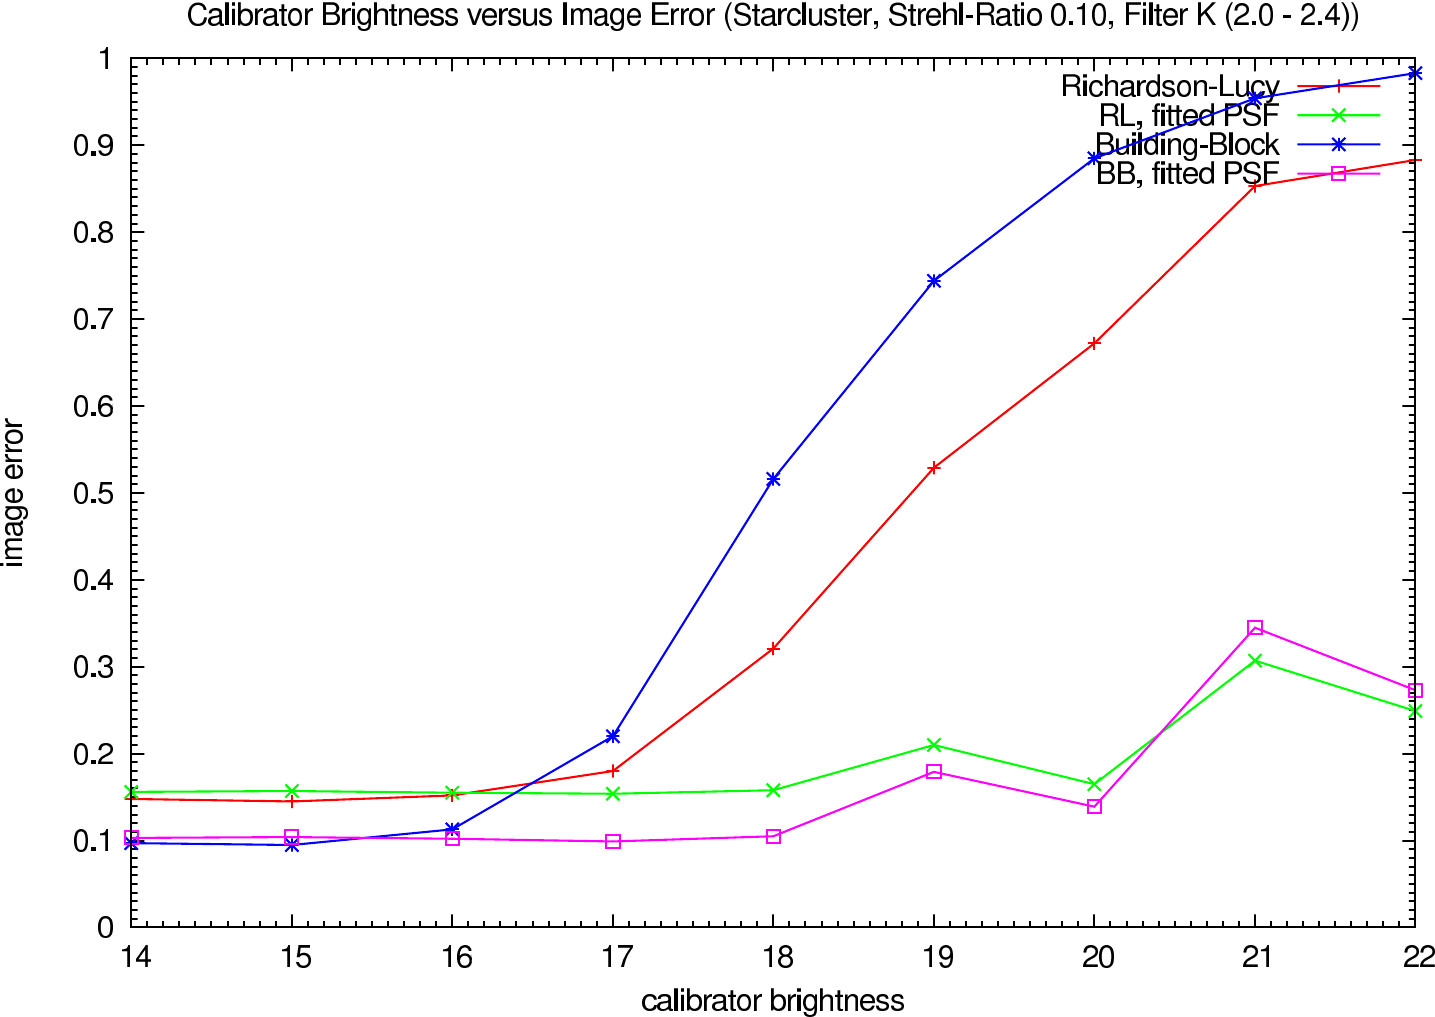 Image errors depending on the calibrator brightness, strehl ratio 0.10, K-Band